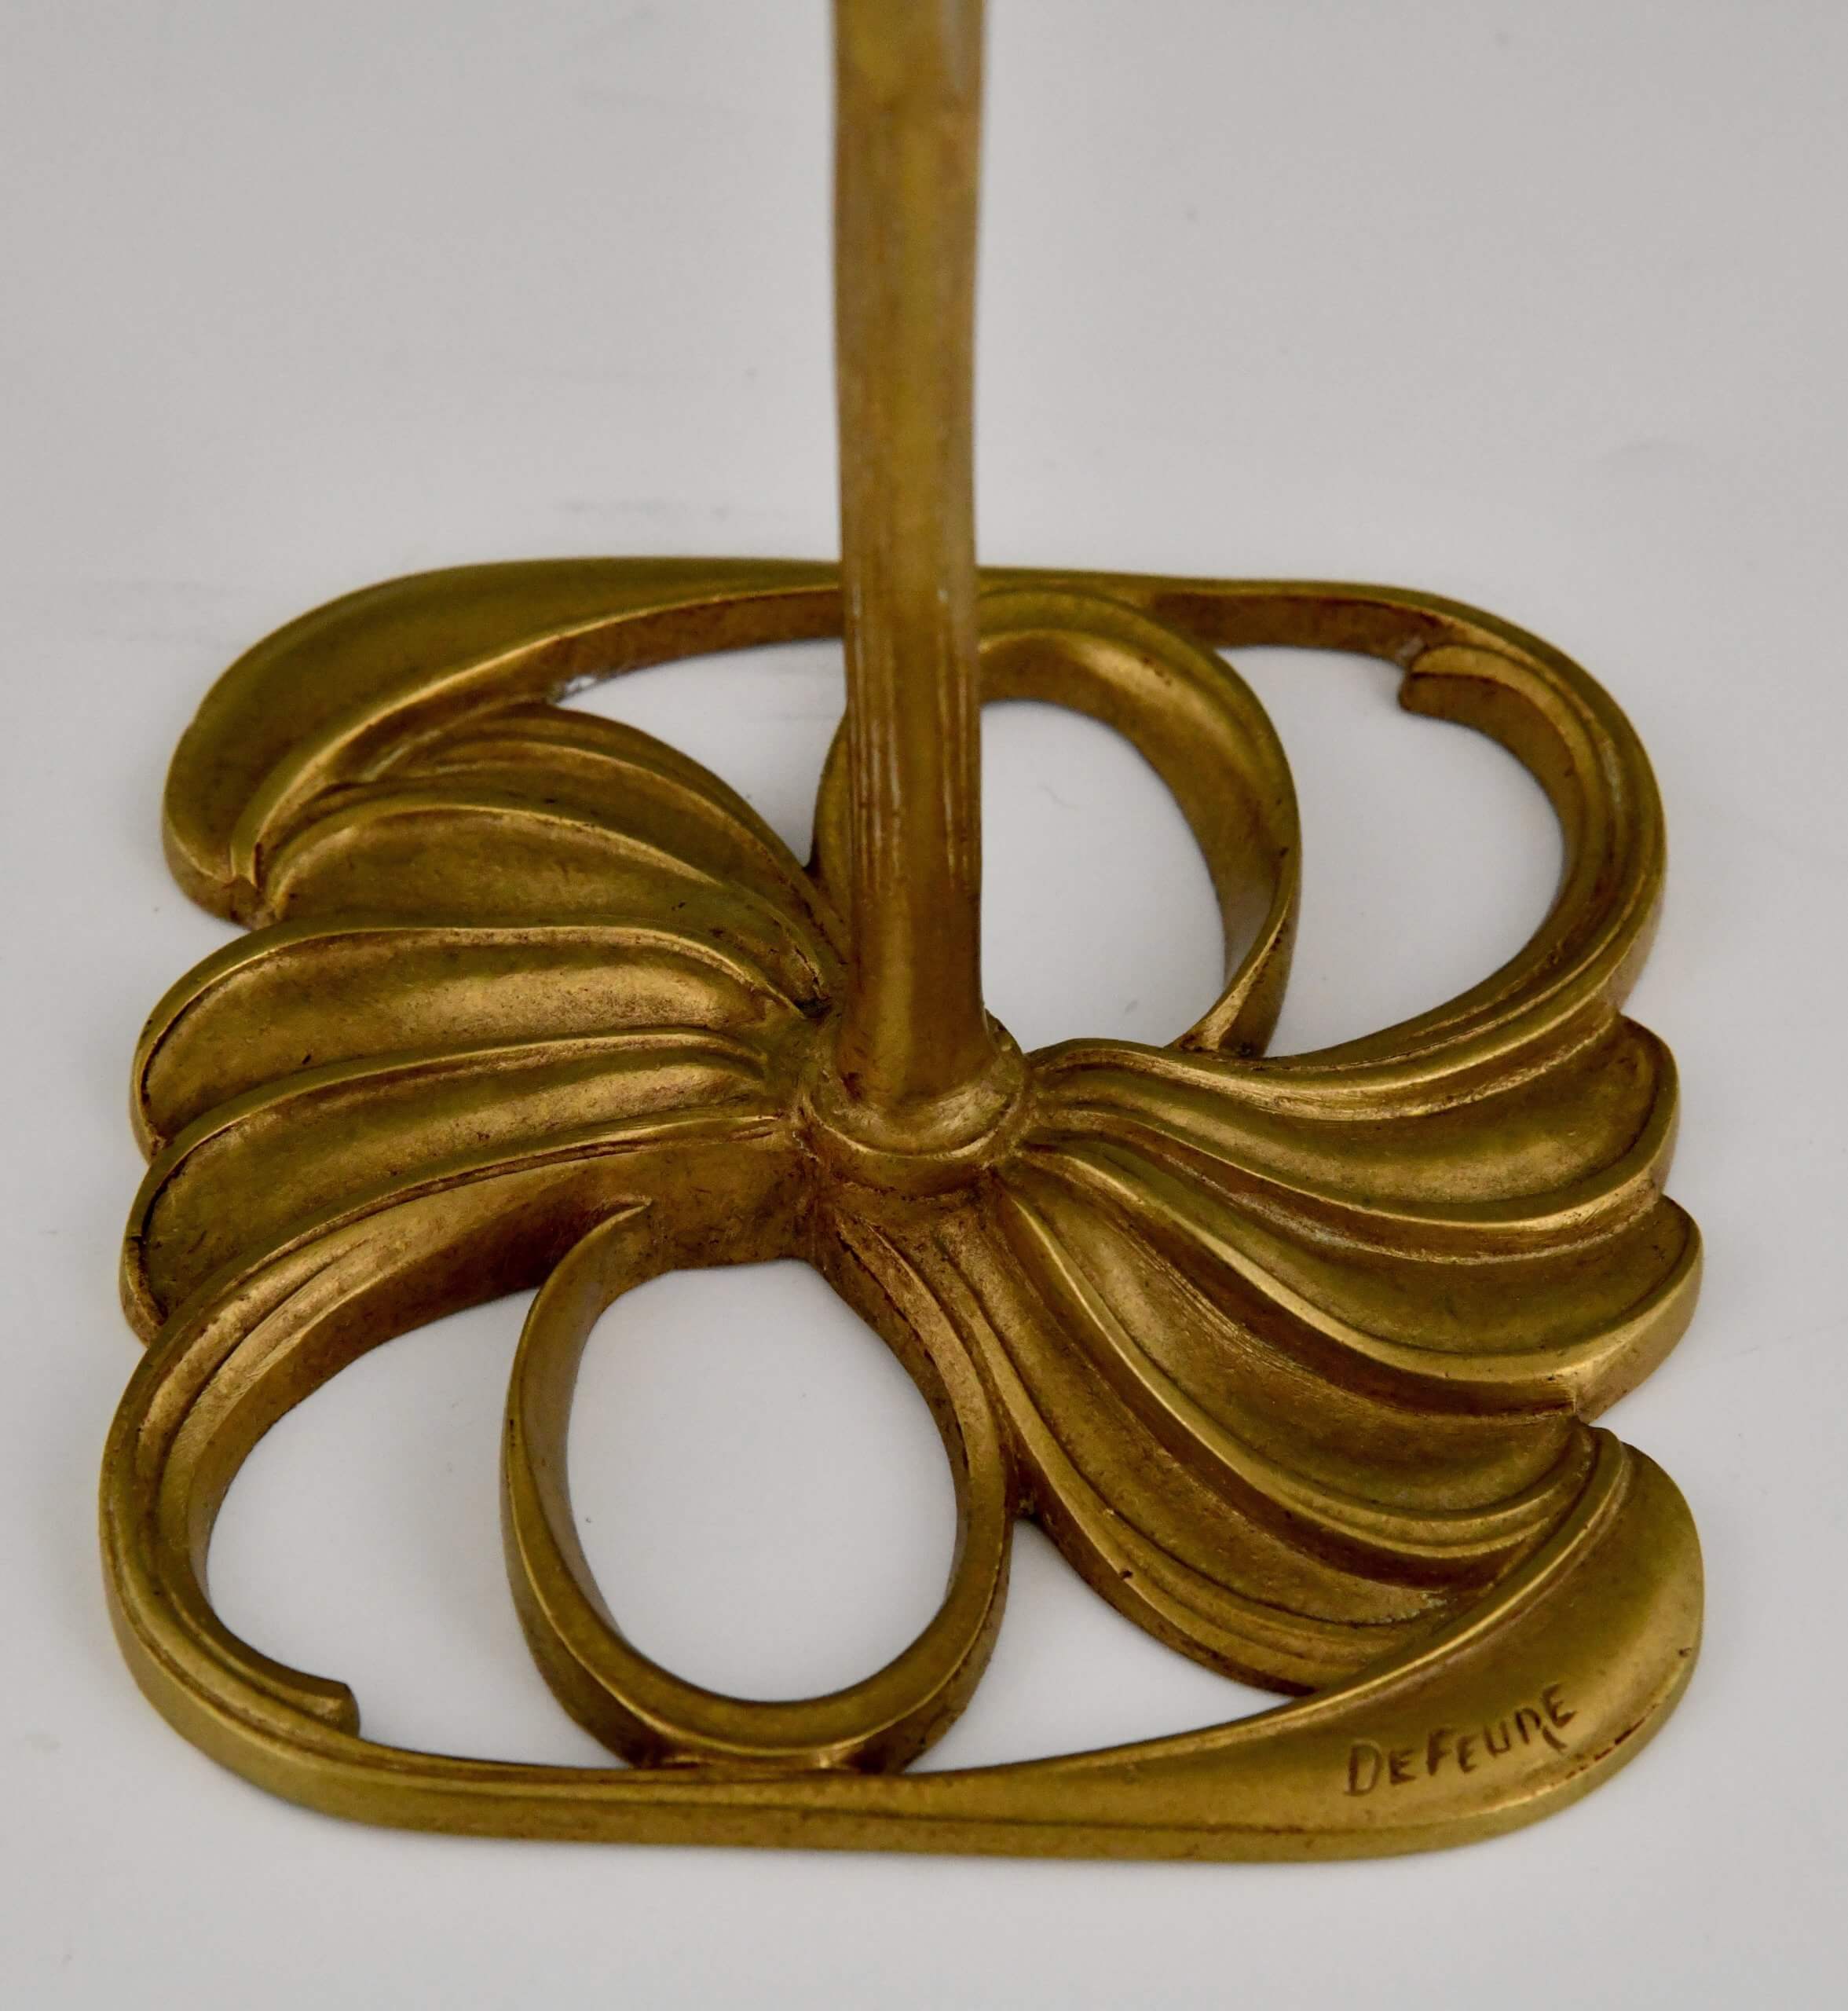 Art Nouveau bronze candlesticks